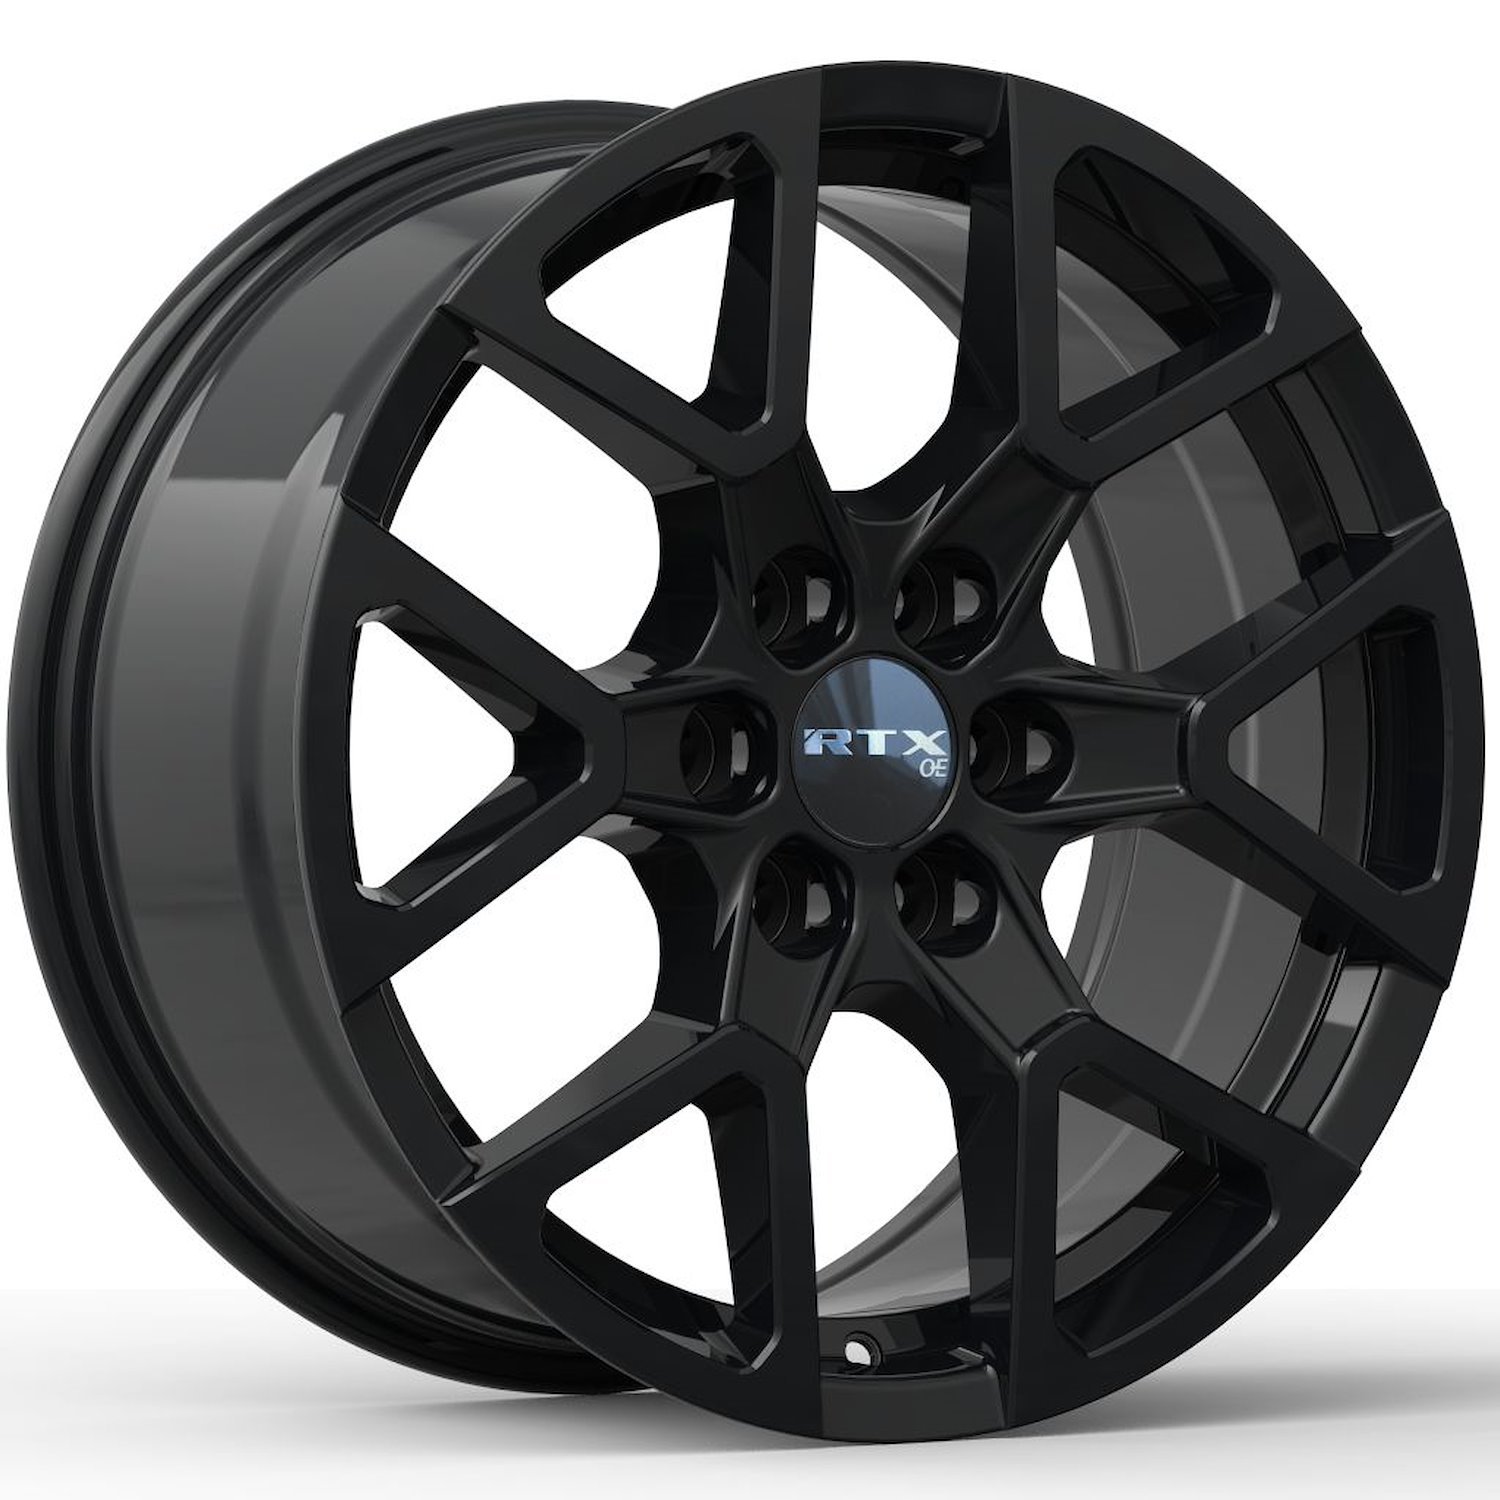 083236 OE-Series GM-02 Wheel [Size: 18" x 8"] Gloss Black Finish